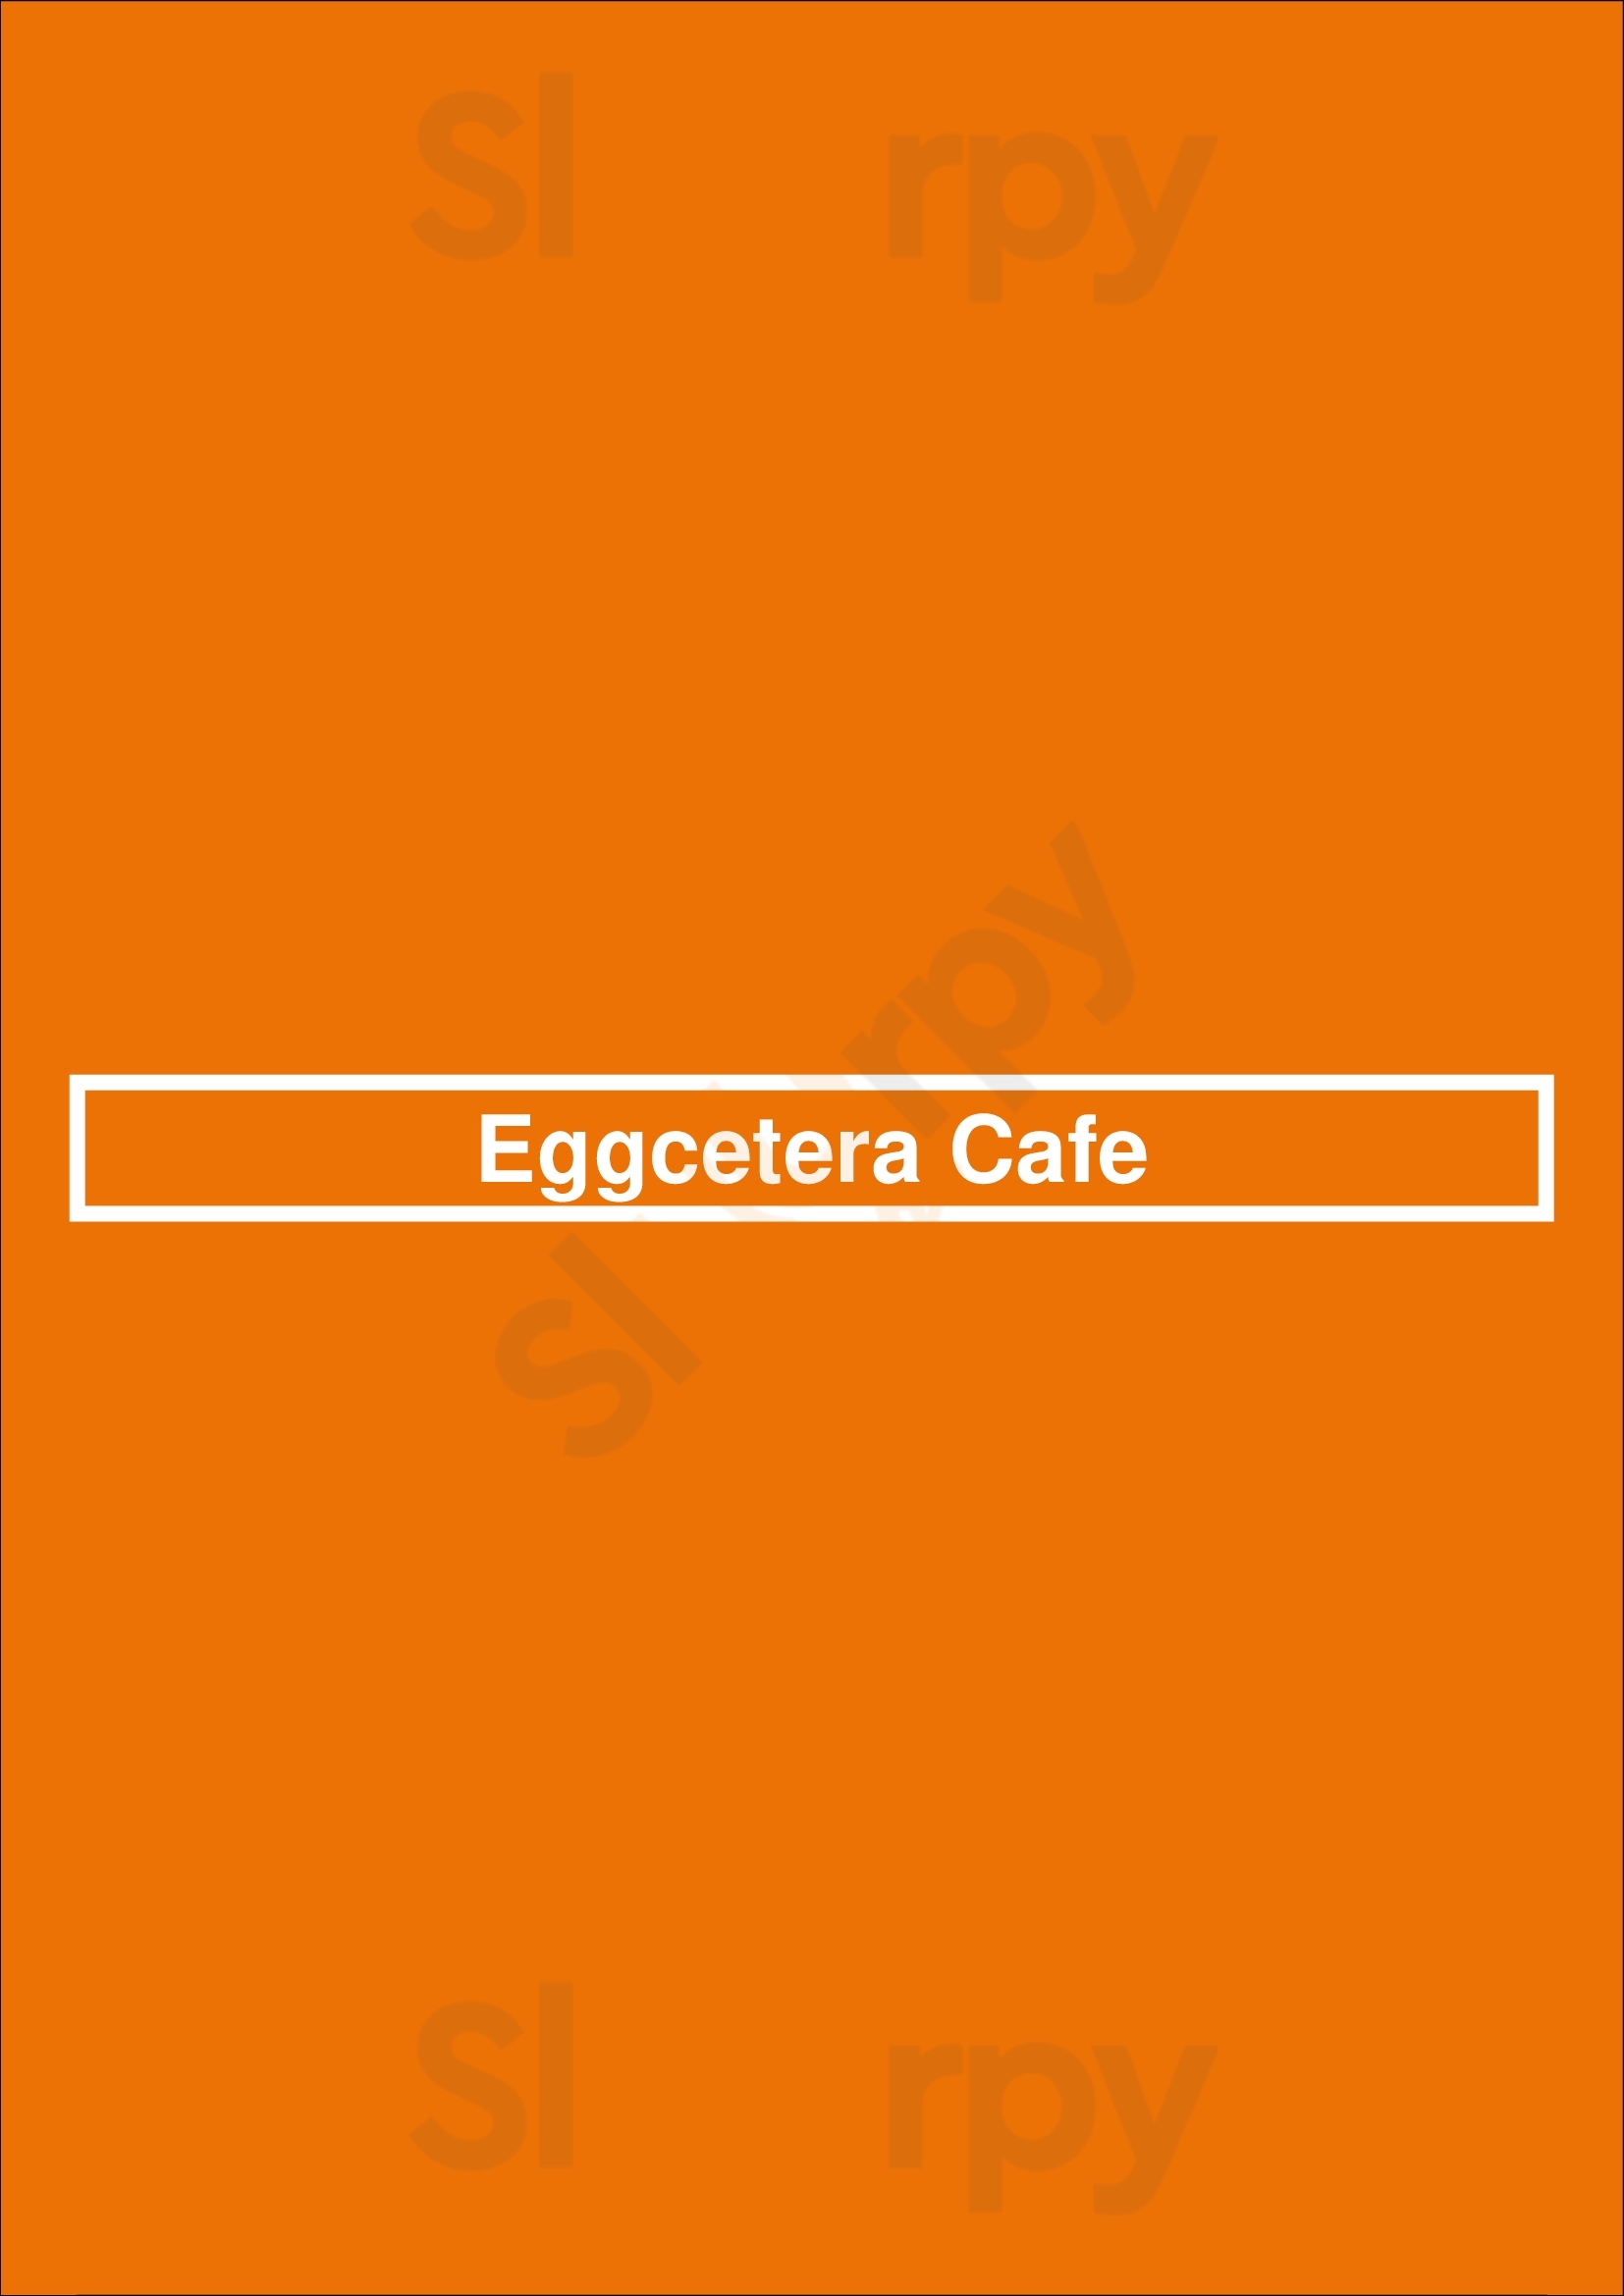 Eggcetera Cafe Mokena Menu - 1